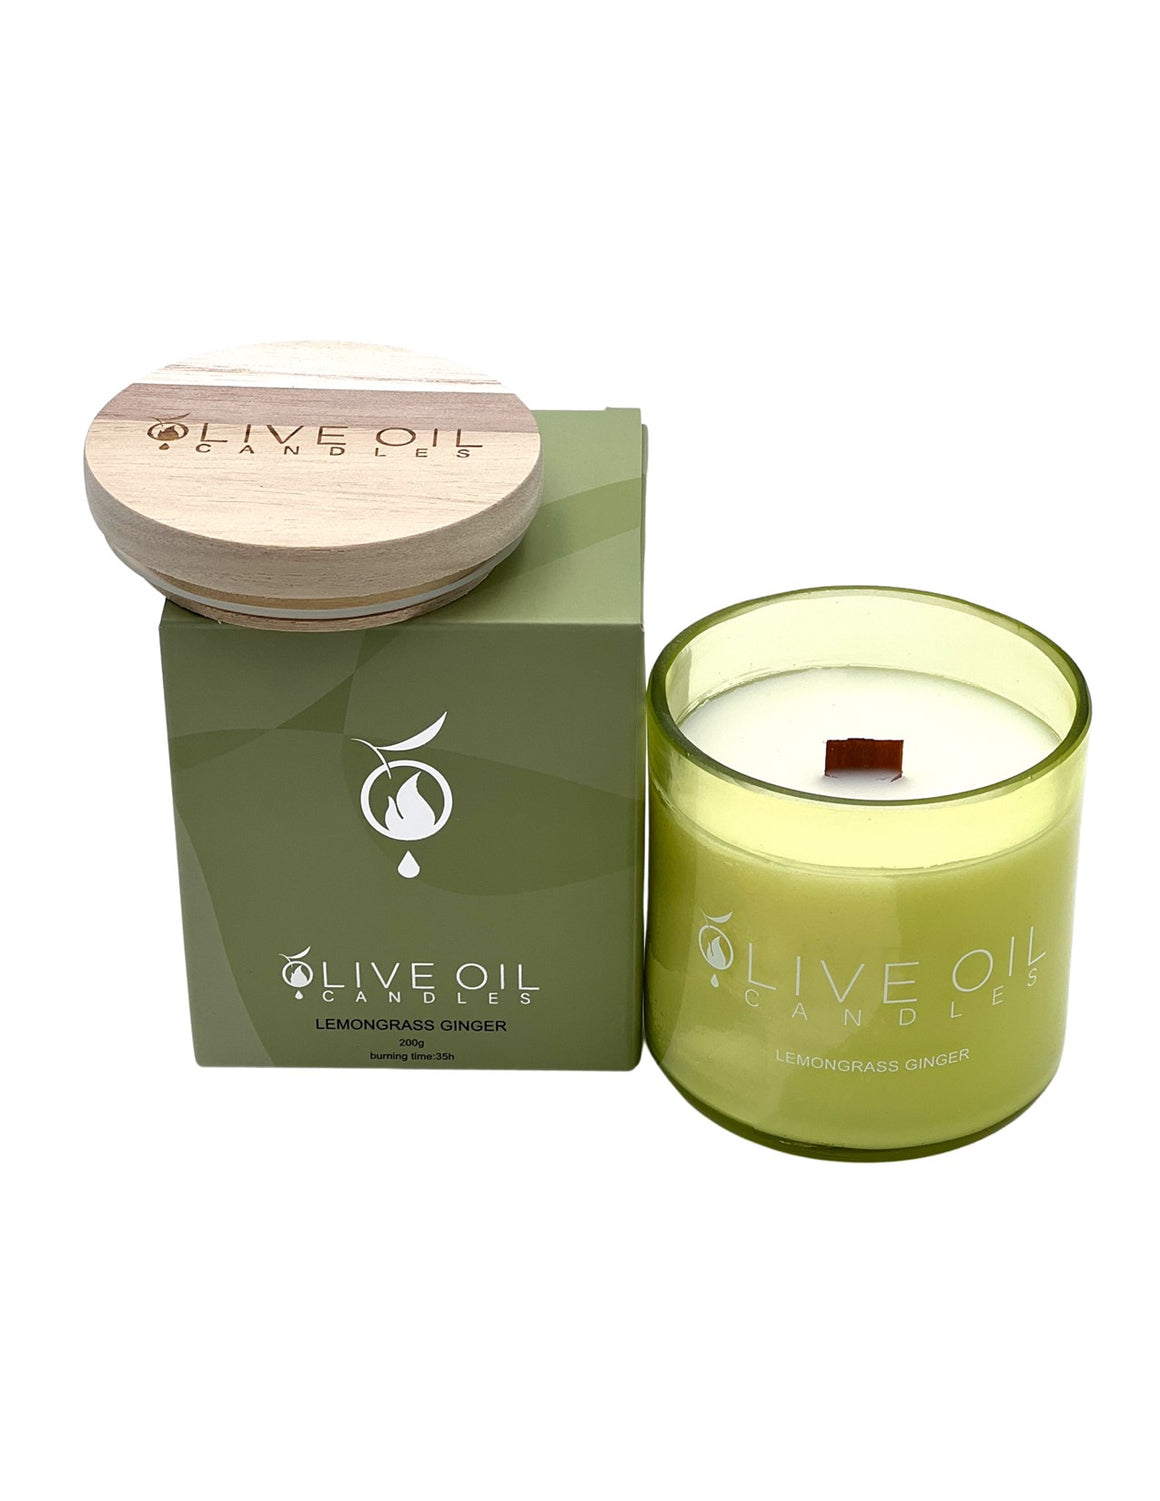 Olive Oil Skin Care Company - Olive Oil Candle - Lemongrass & Ginger